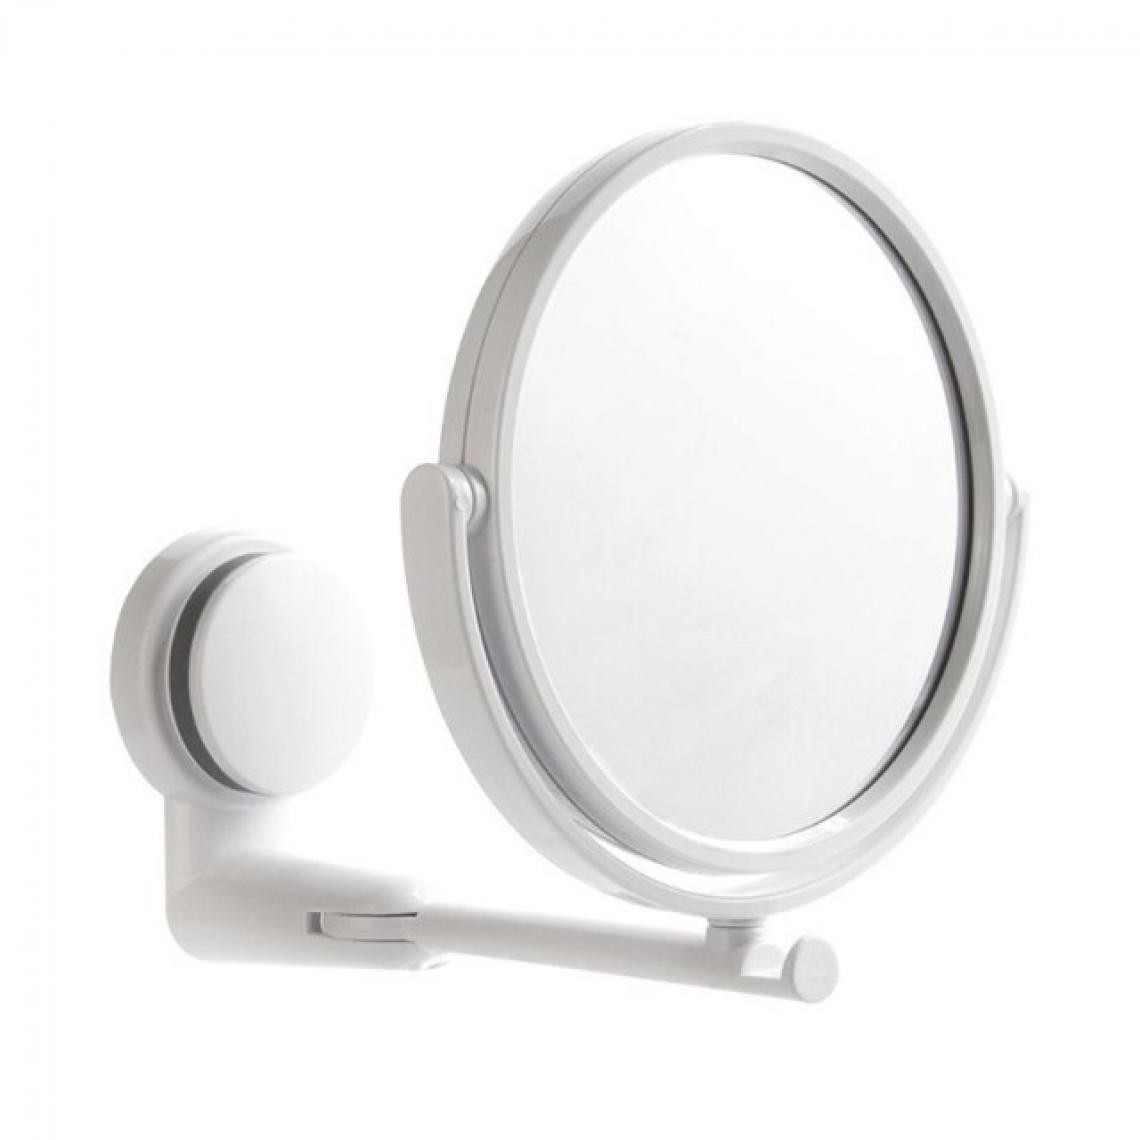 Universal - Miroir de maquillage pliant, miroir de toilette suspendu, miroir de toilette pivotant, miroir de rasage à bras pliant.(blanche) - Miroir de salle de bain